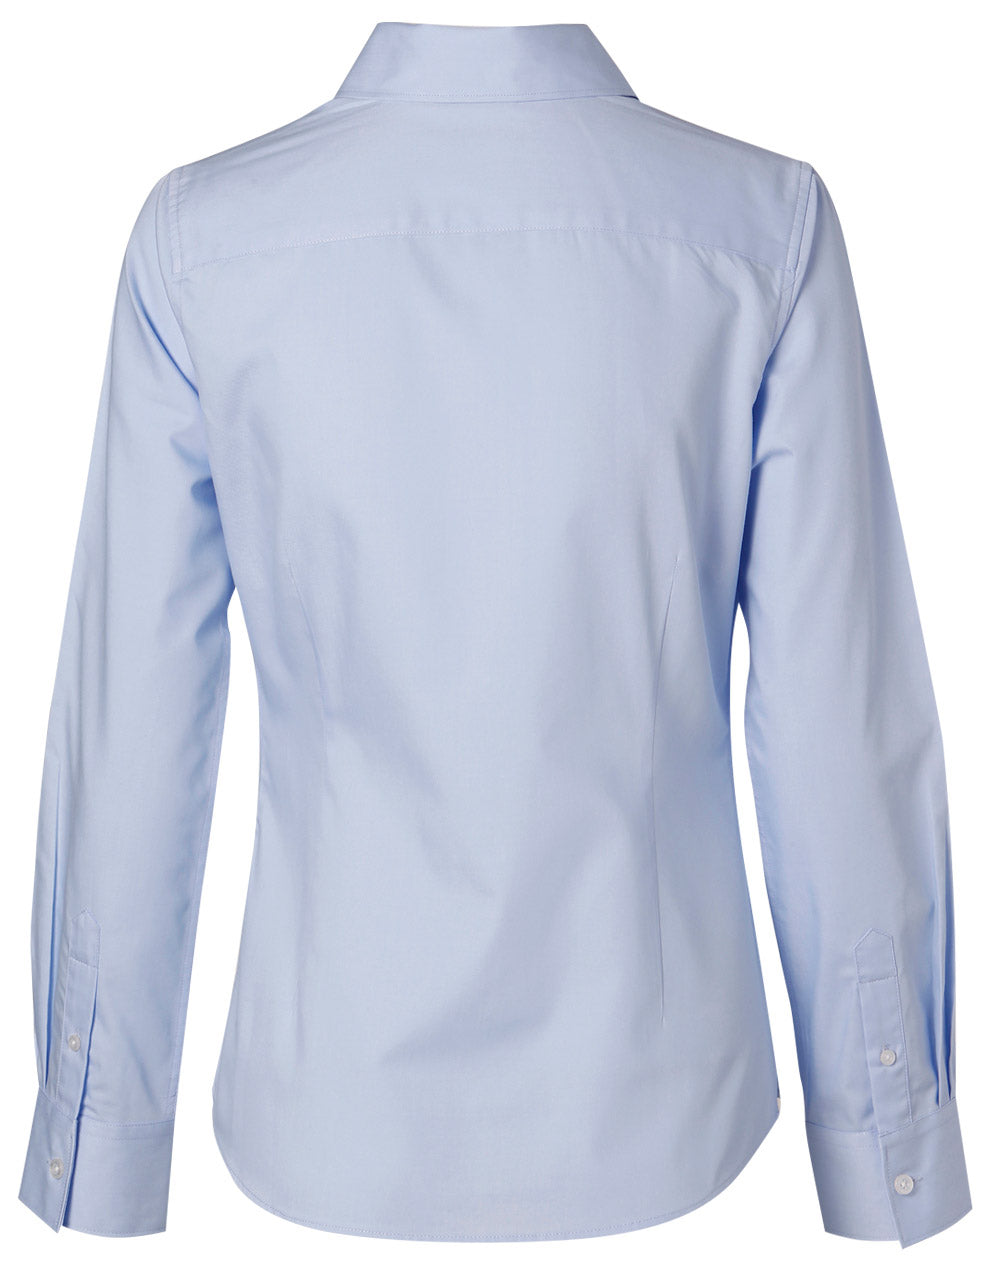 Benchmark M8030L Women's Fine Twill Long Sleeve Shirt